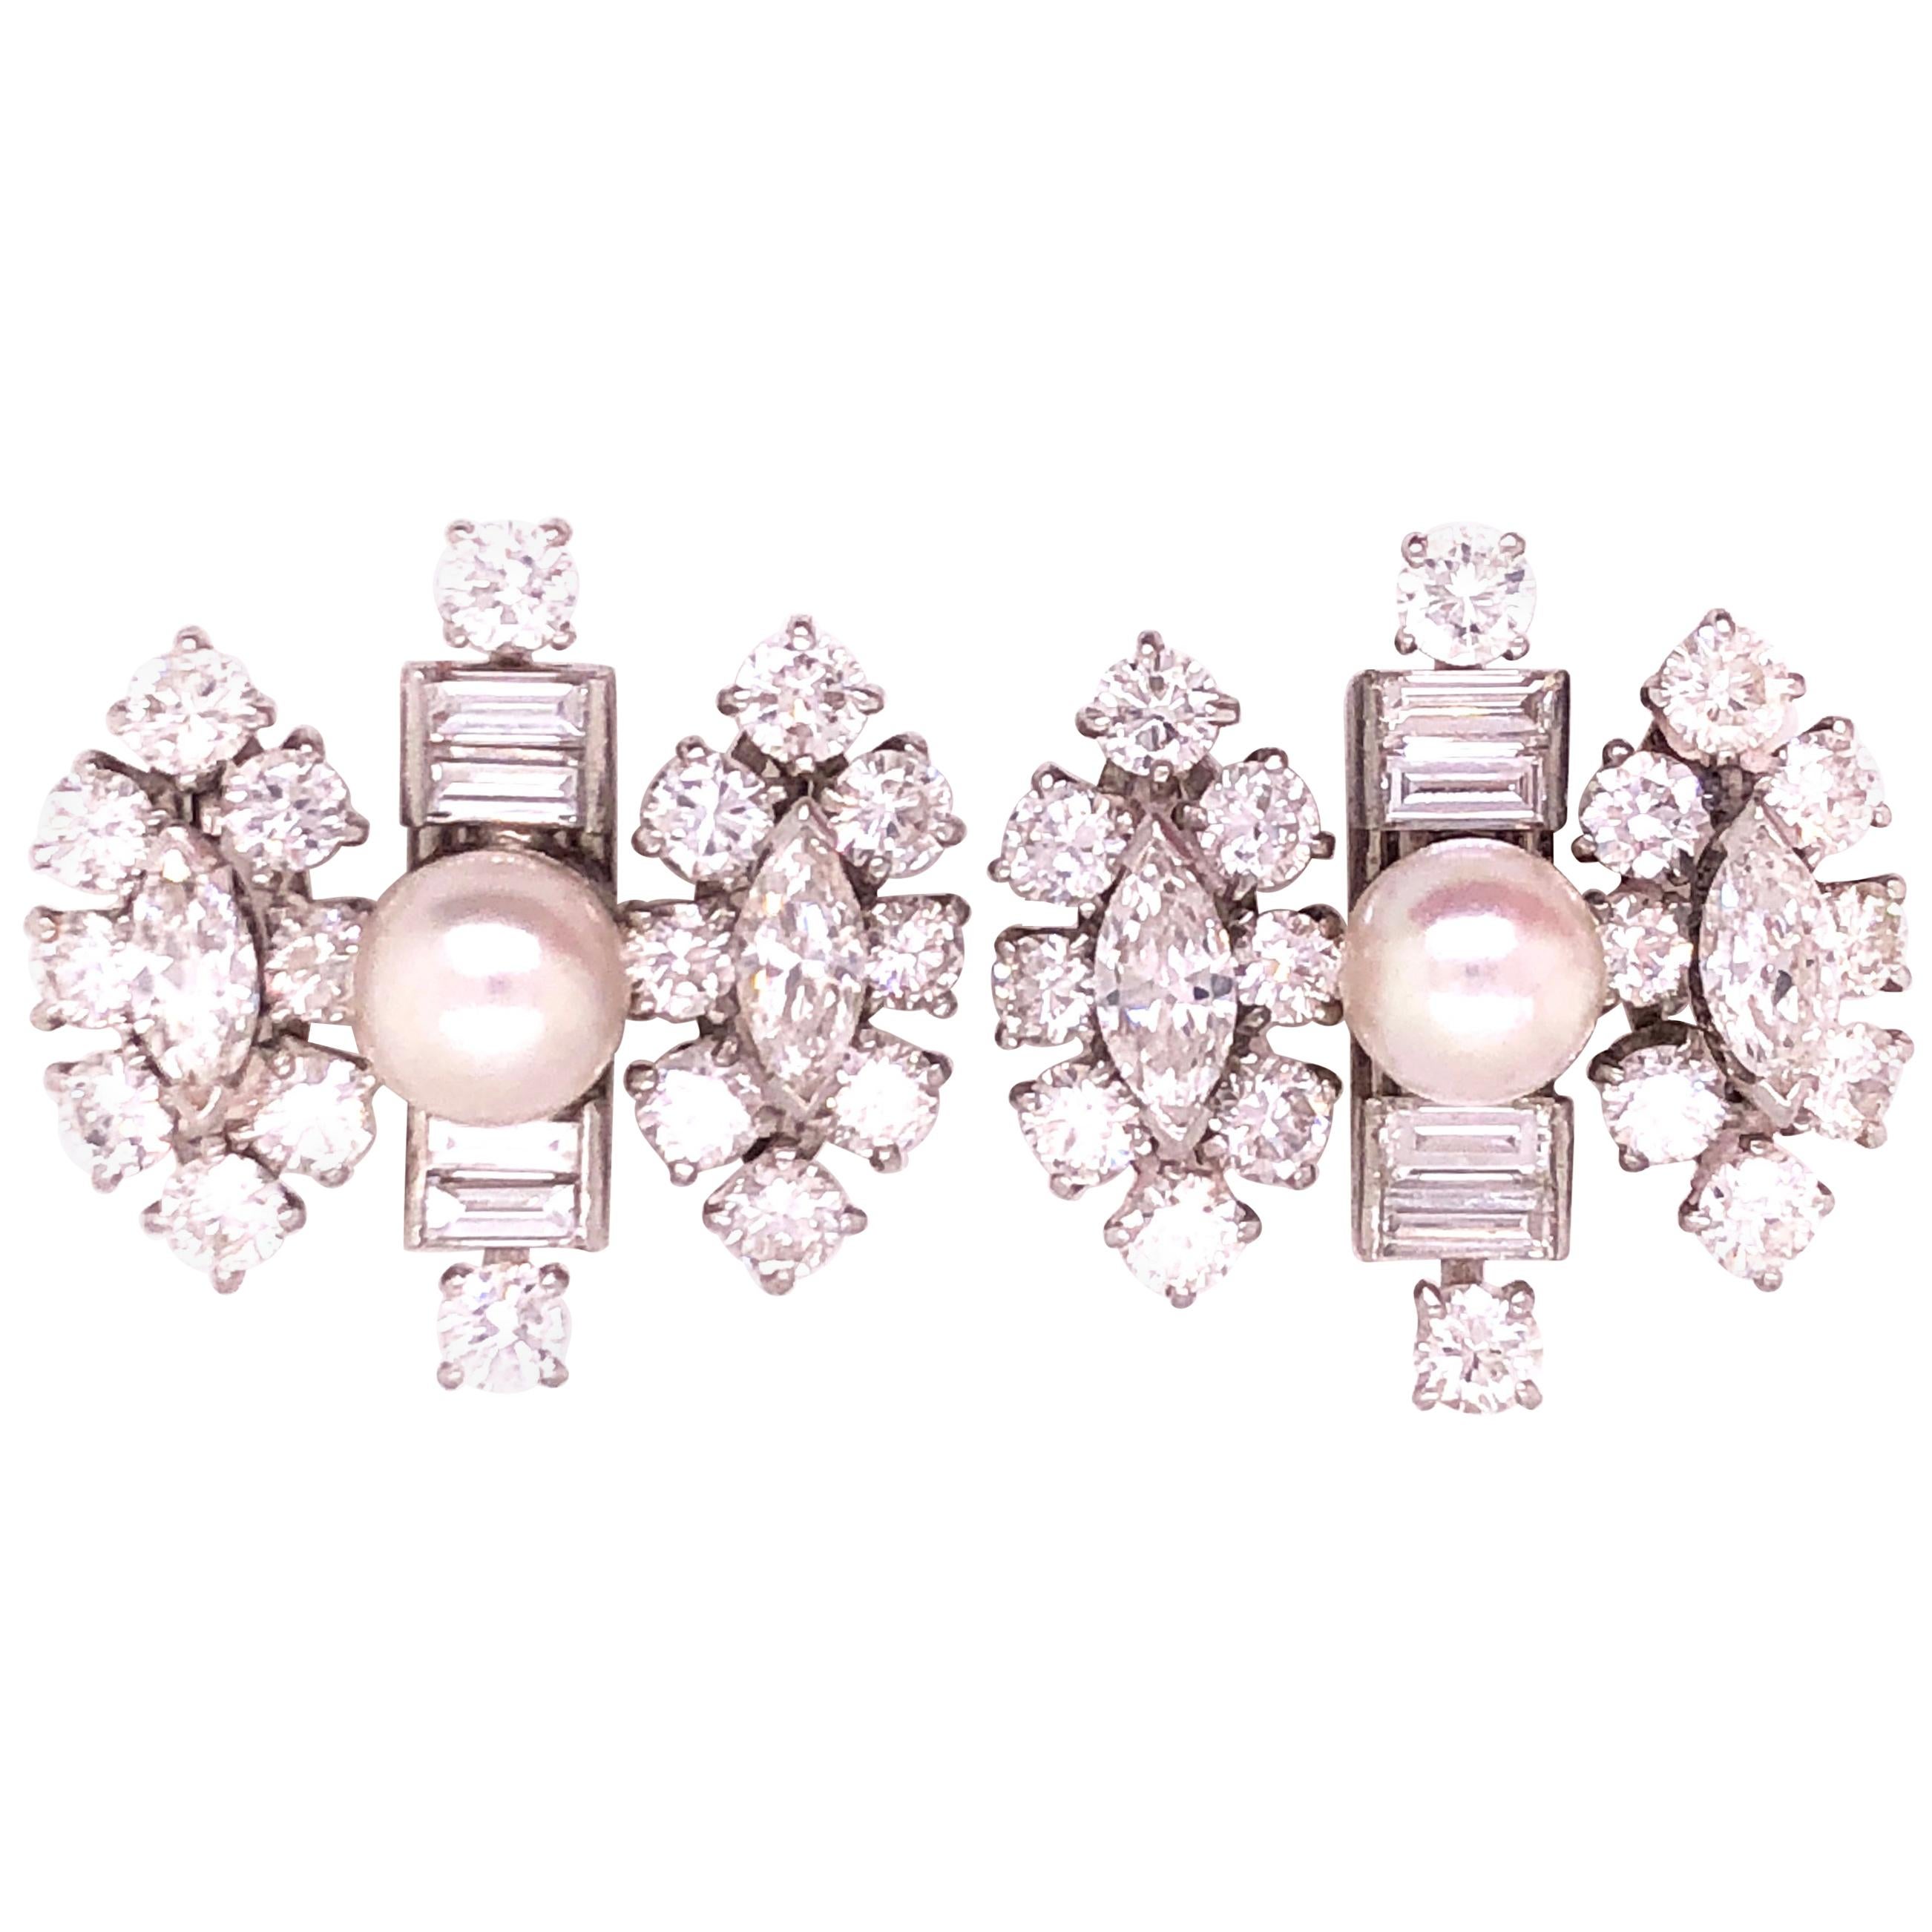 18 Karat White Gold Fancy Diamond Earrings with Pearl For Sale